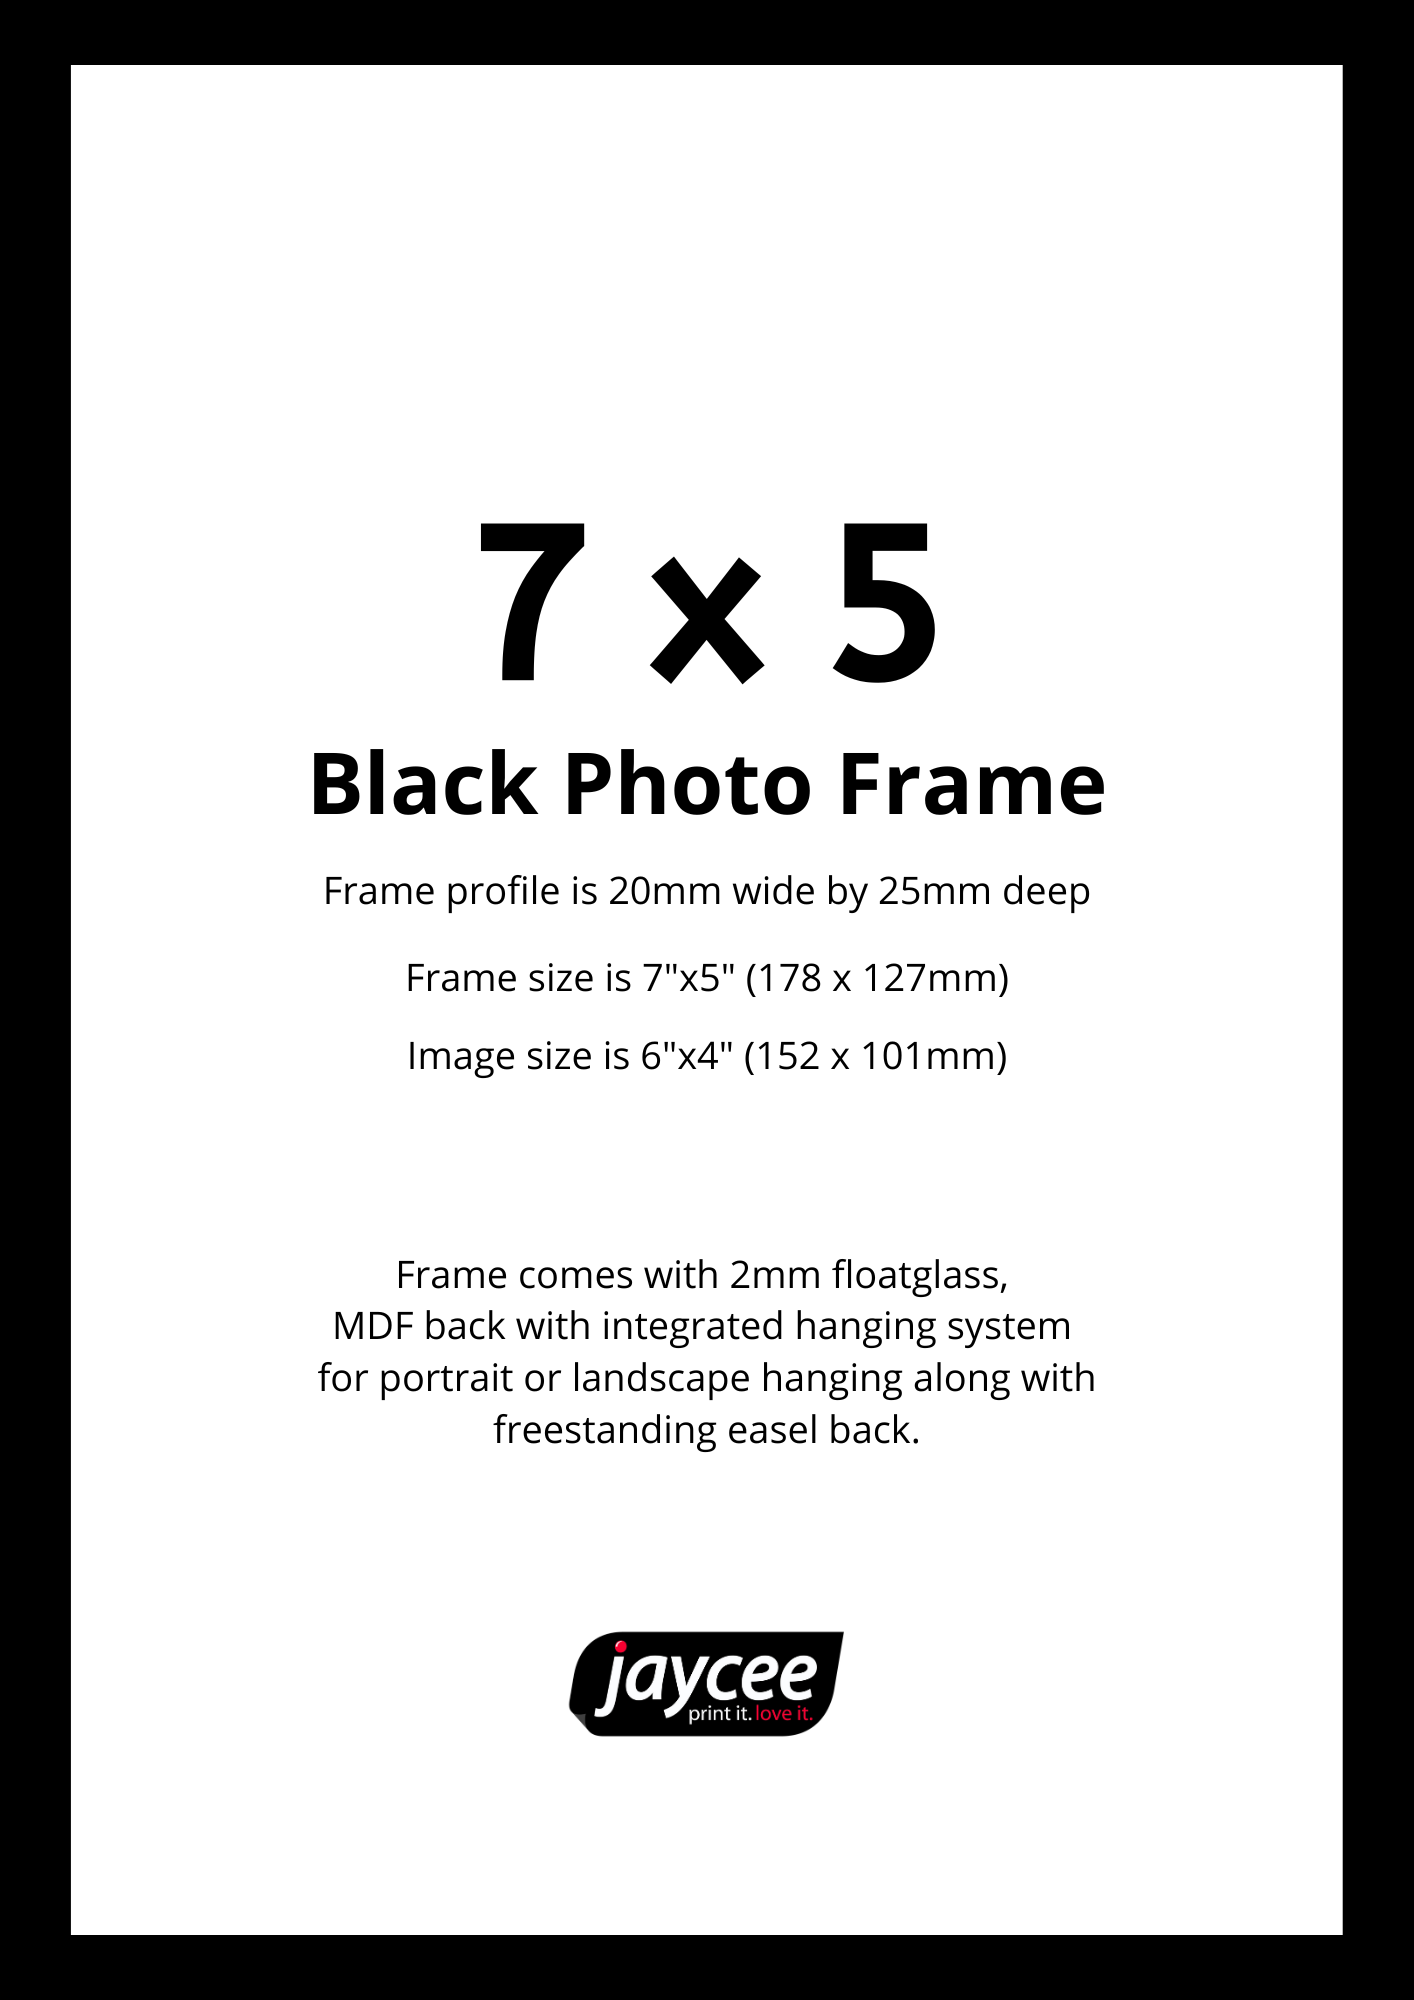 7x5 Black Photo Frame